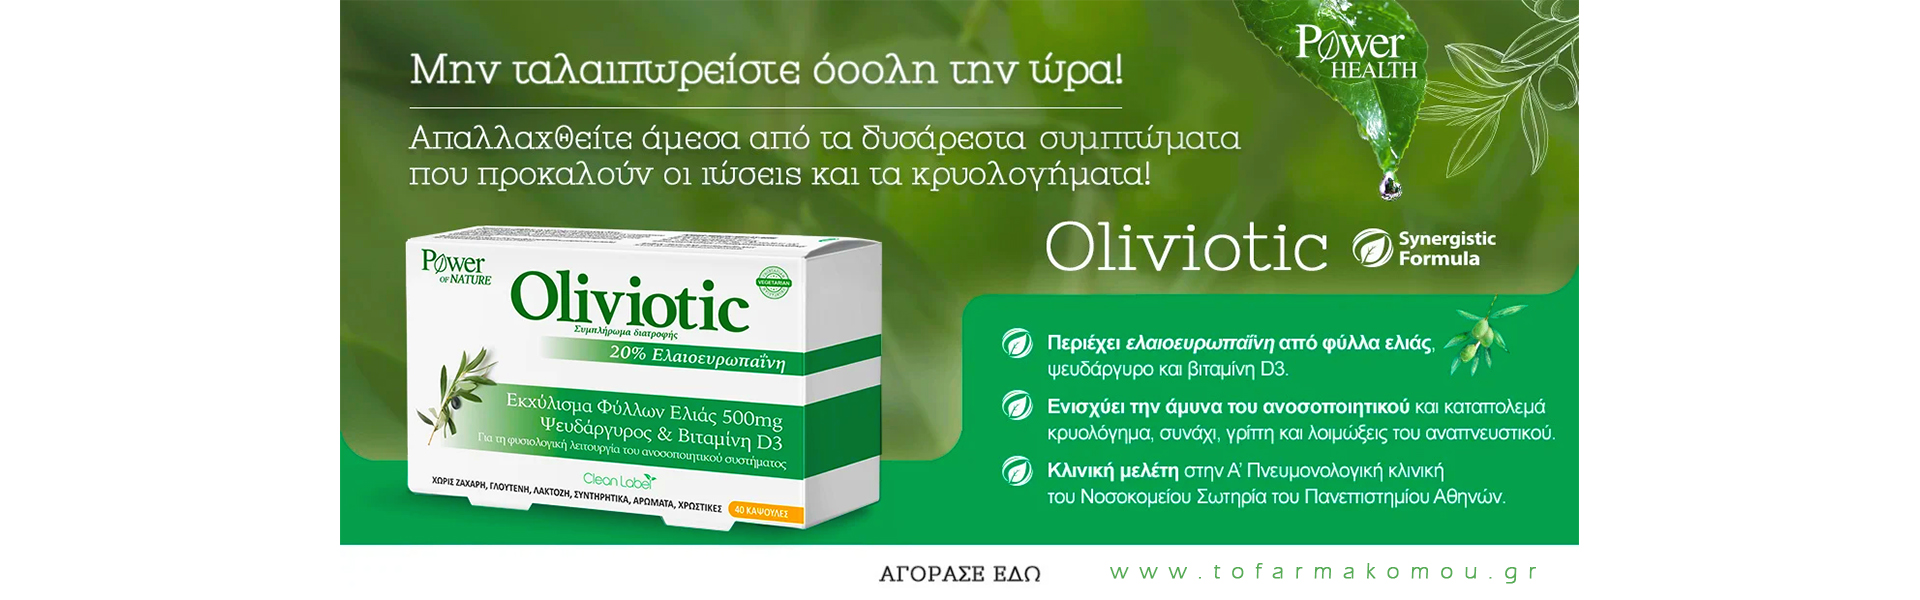 oliviotic_banner.jpg